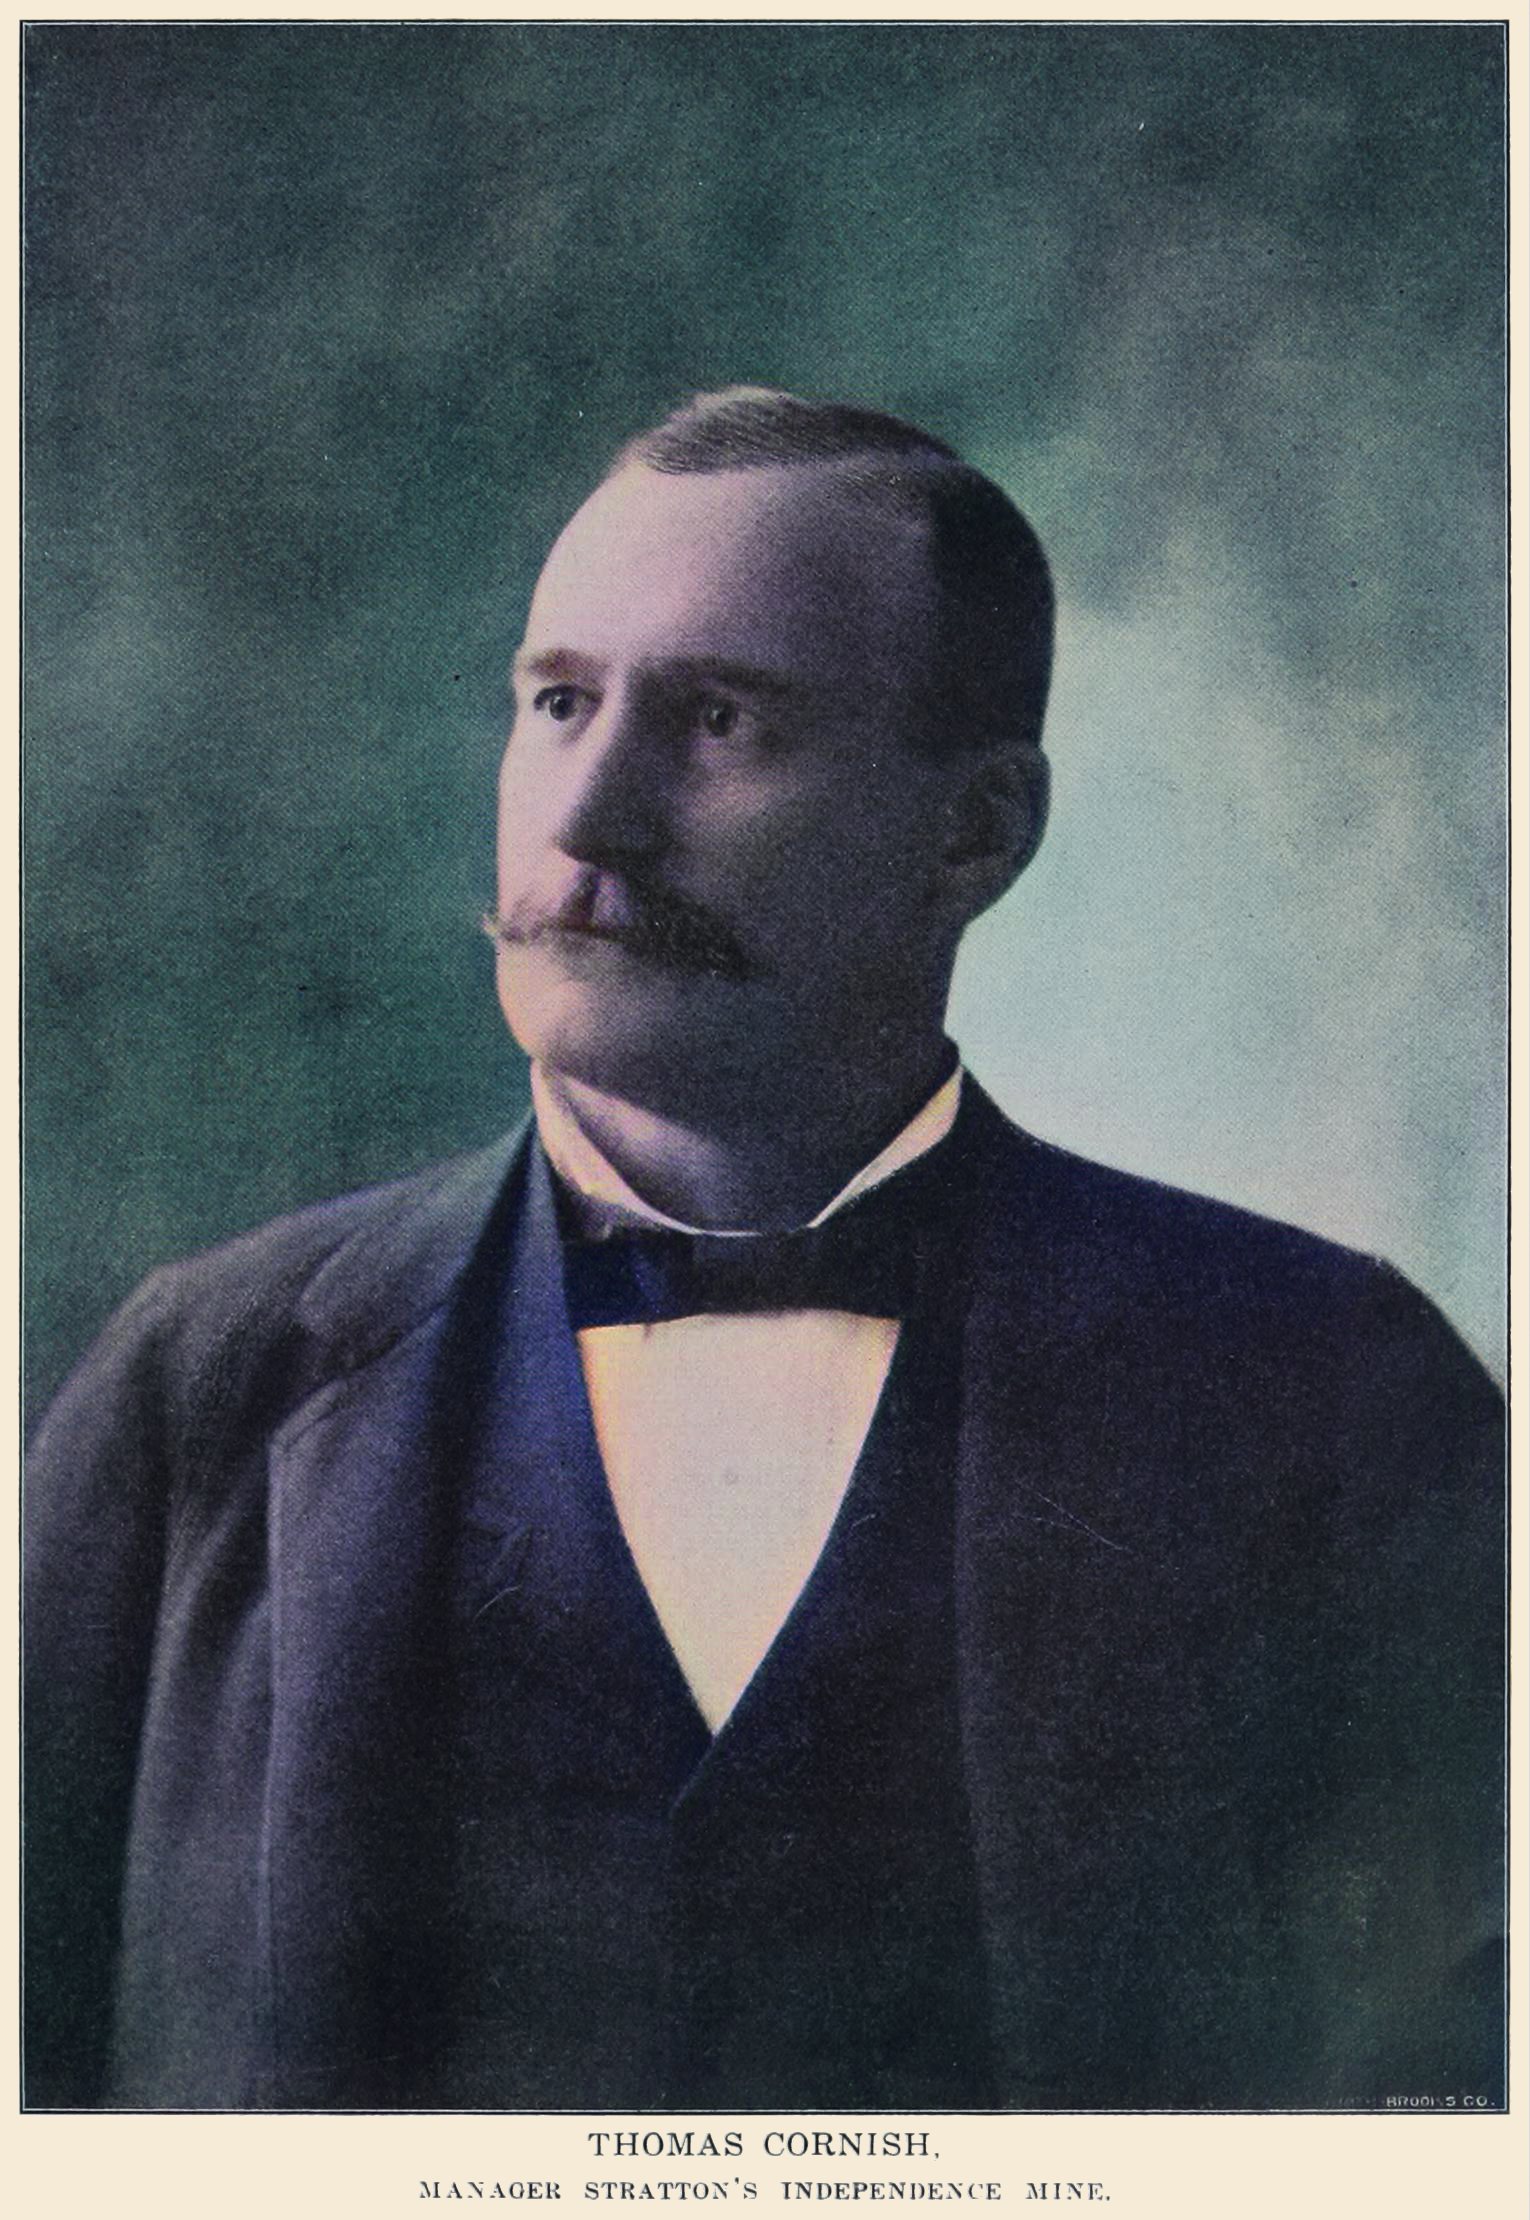 Thomas Cornish, Manager Stratton's Independence Mine.